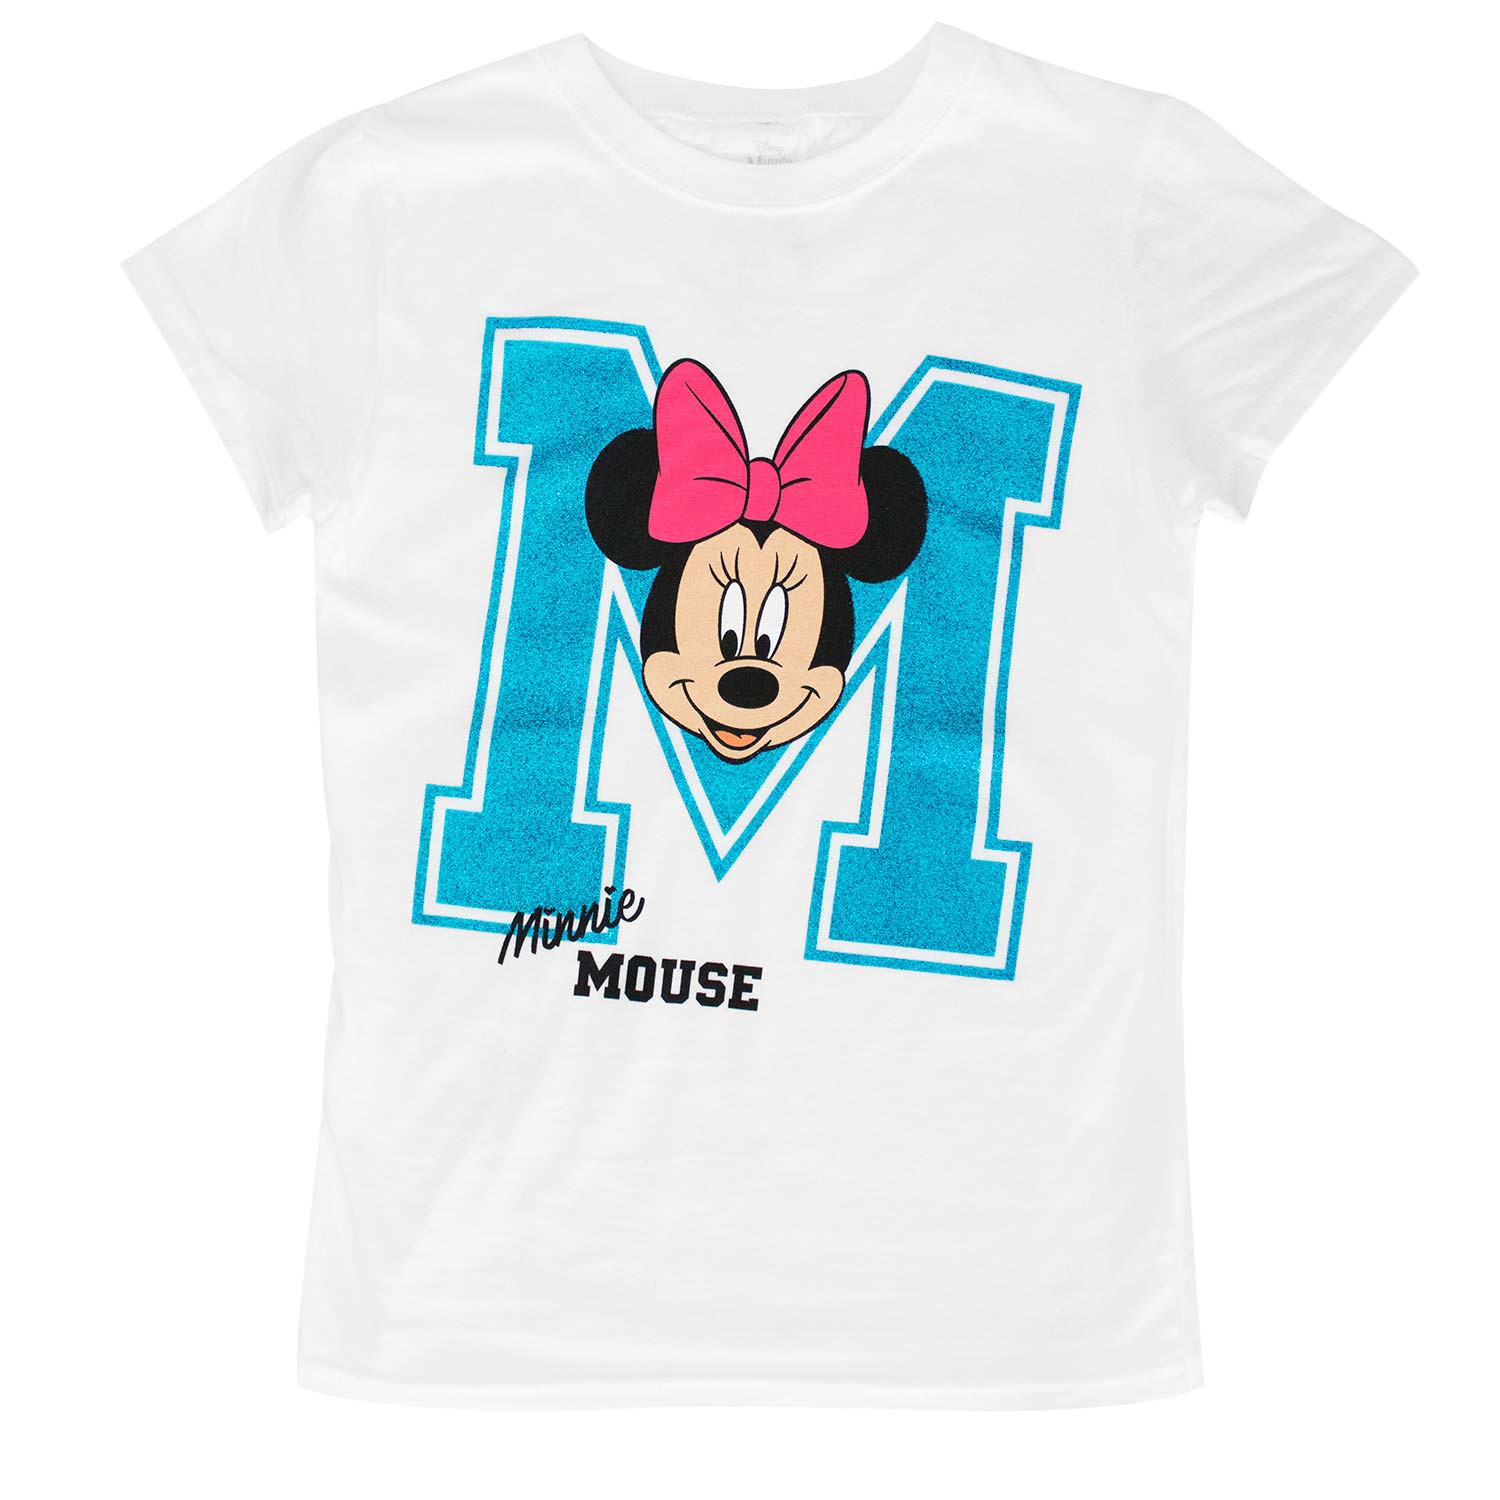 Minnie Mouse Glitter M Youth Girls 7-16 White T-Shirt